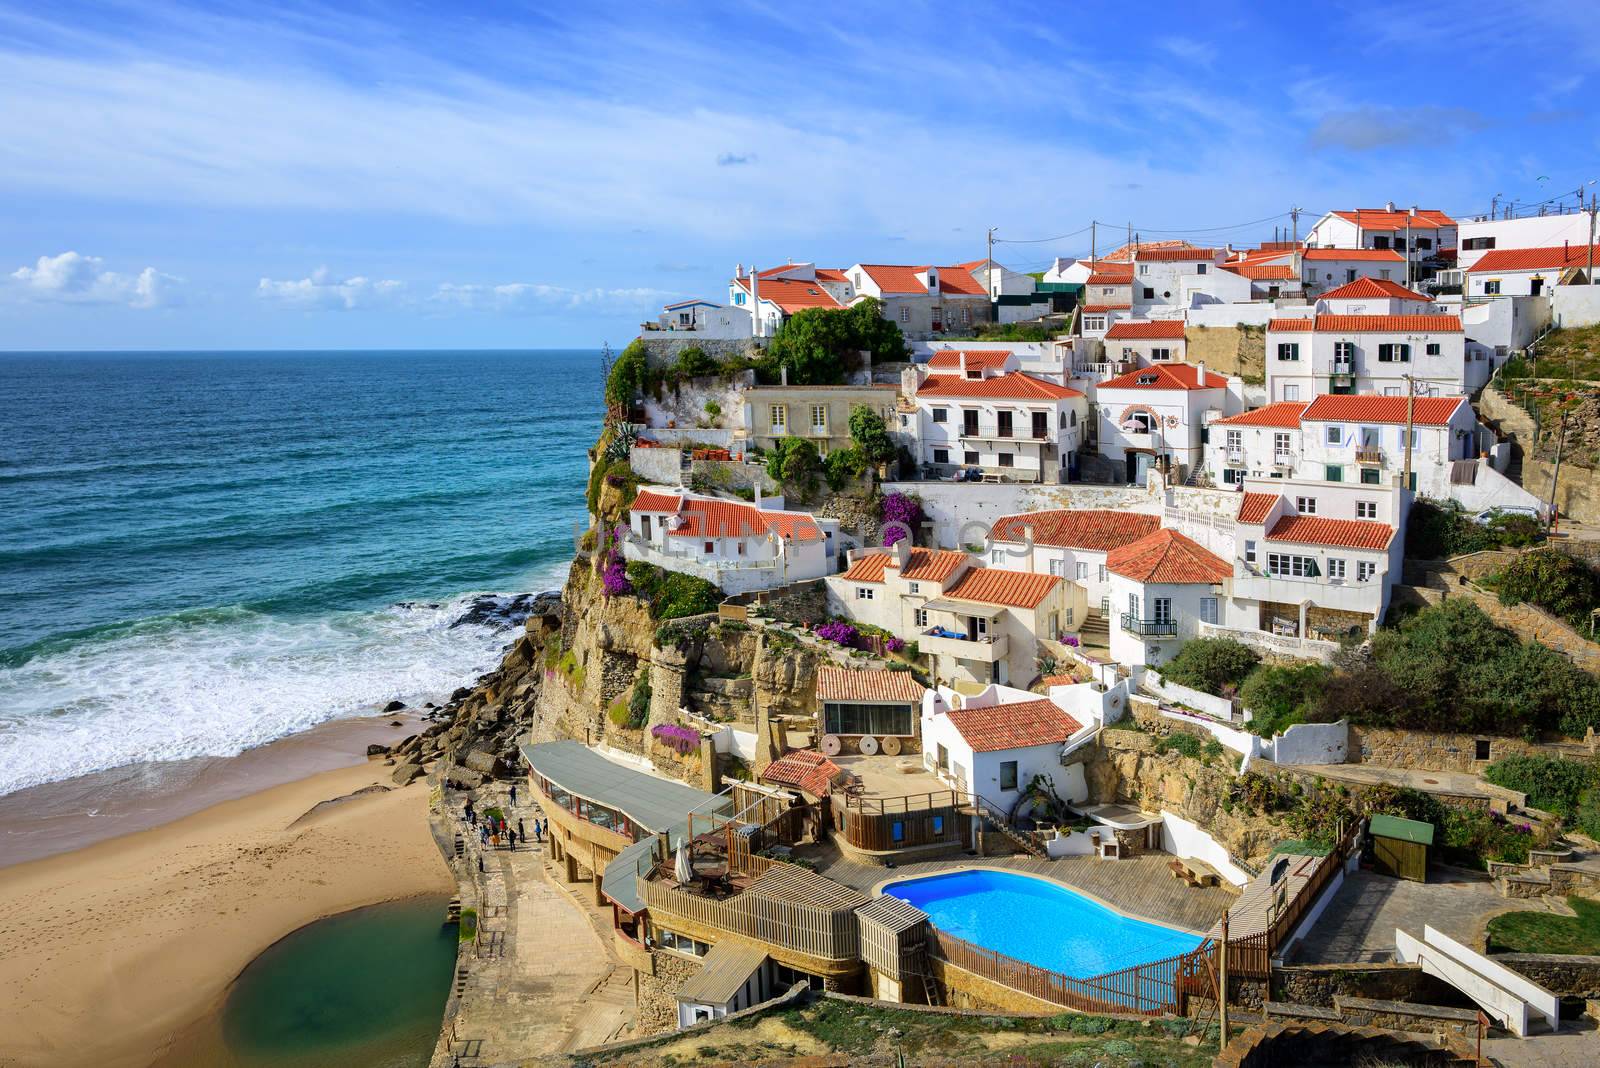 Azenhas do Mar, a little fishermen village on atlantic coast near Cabo da Roca, Portugal